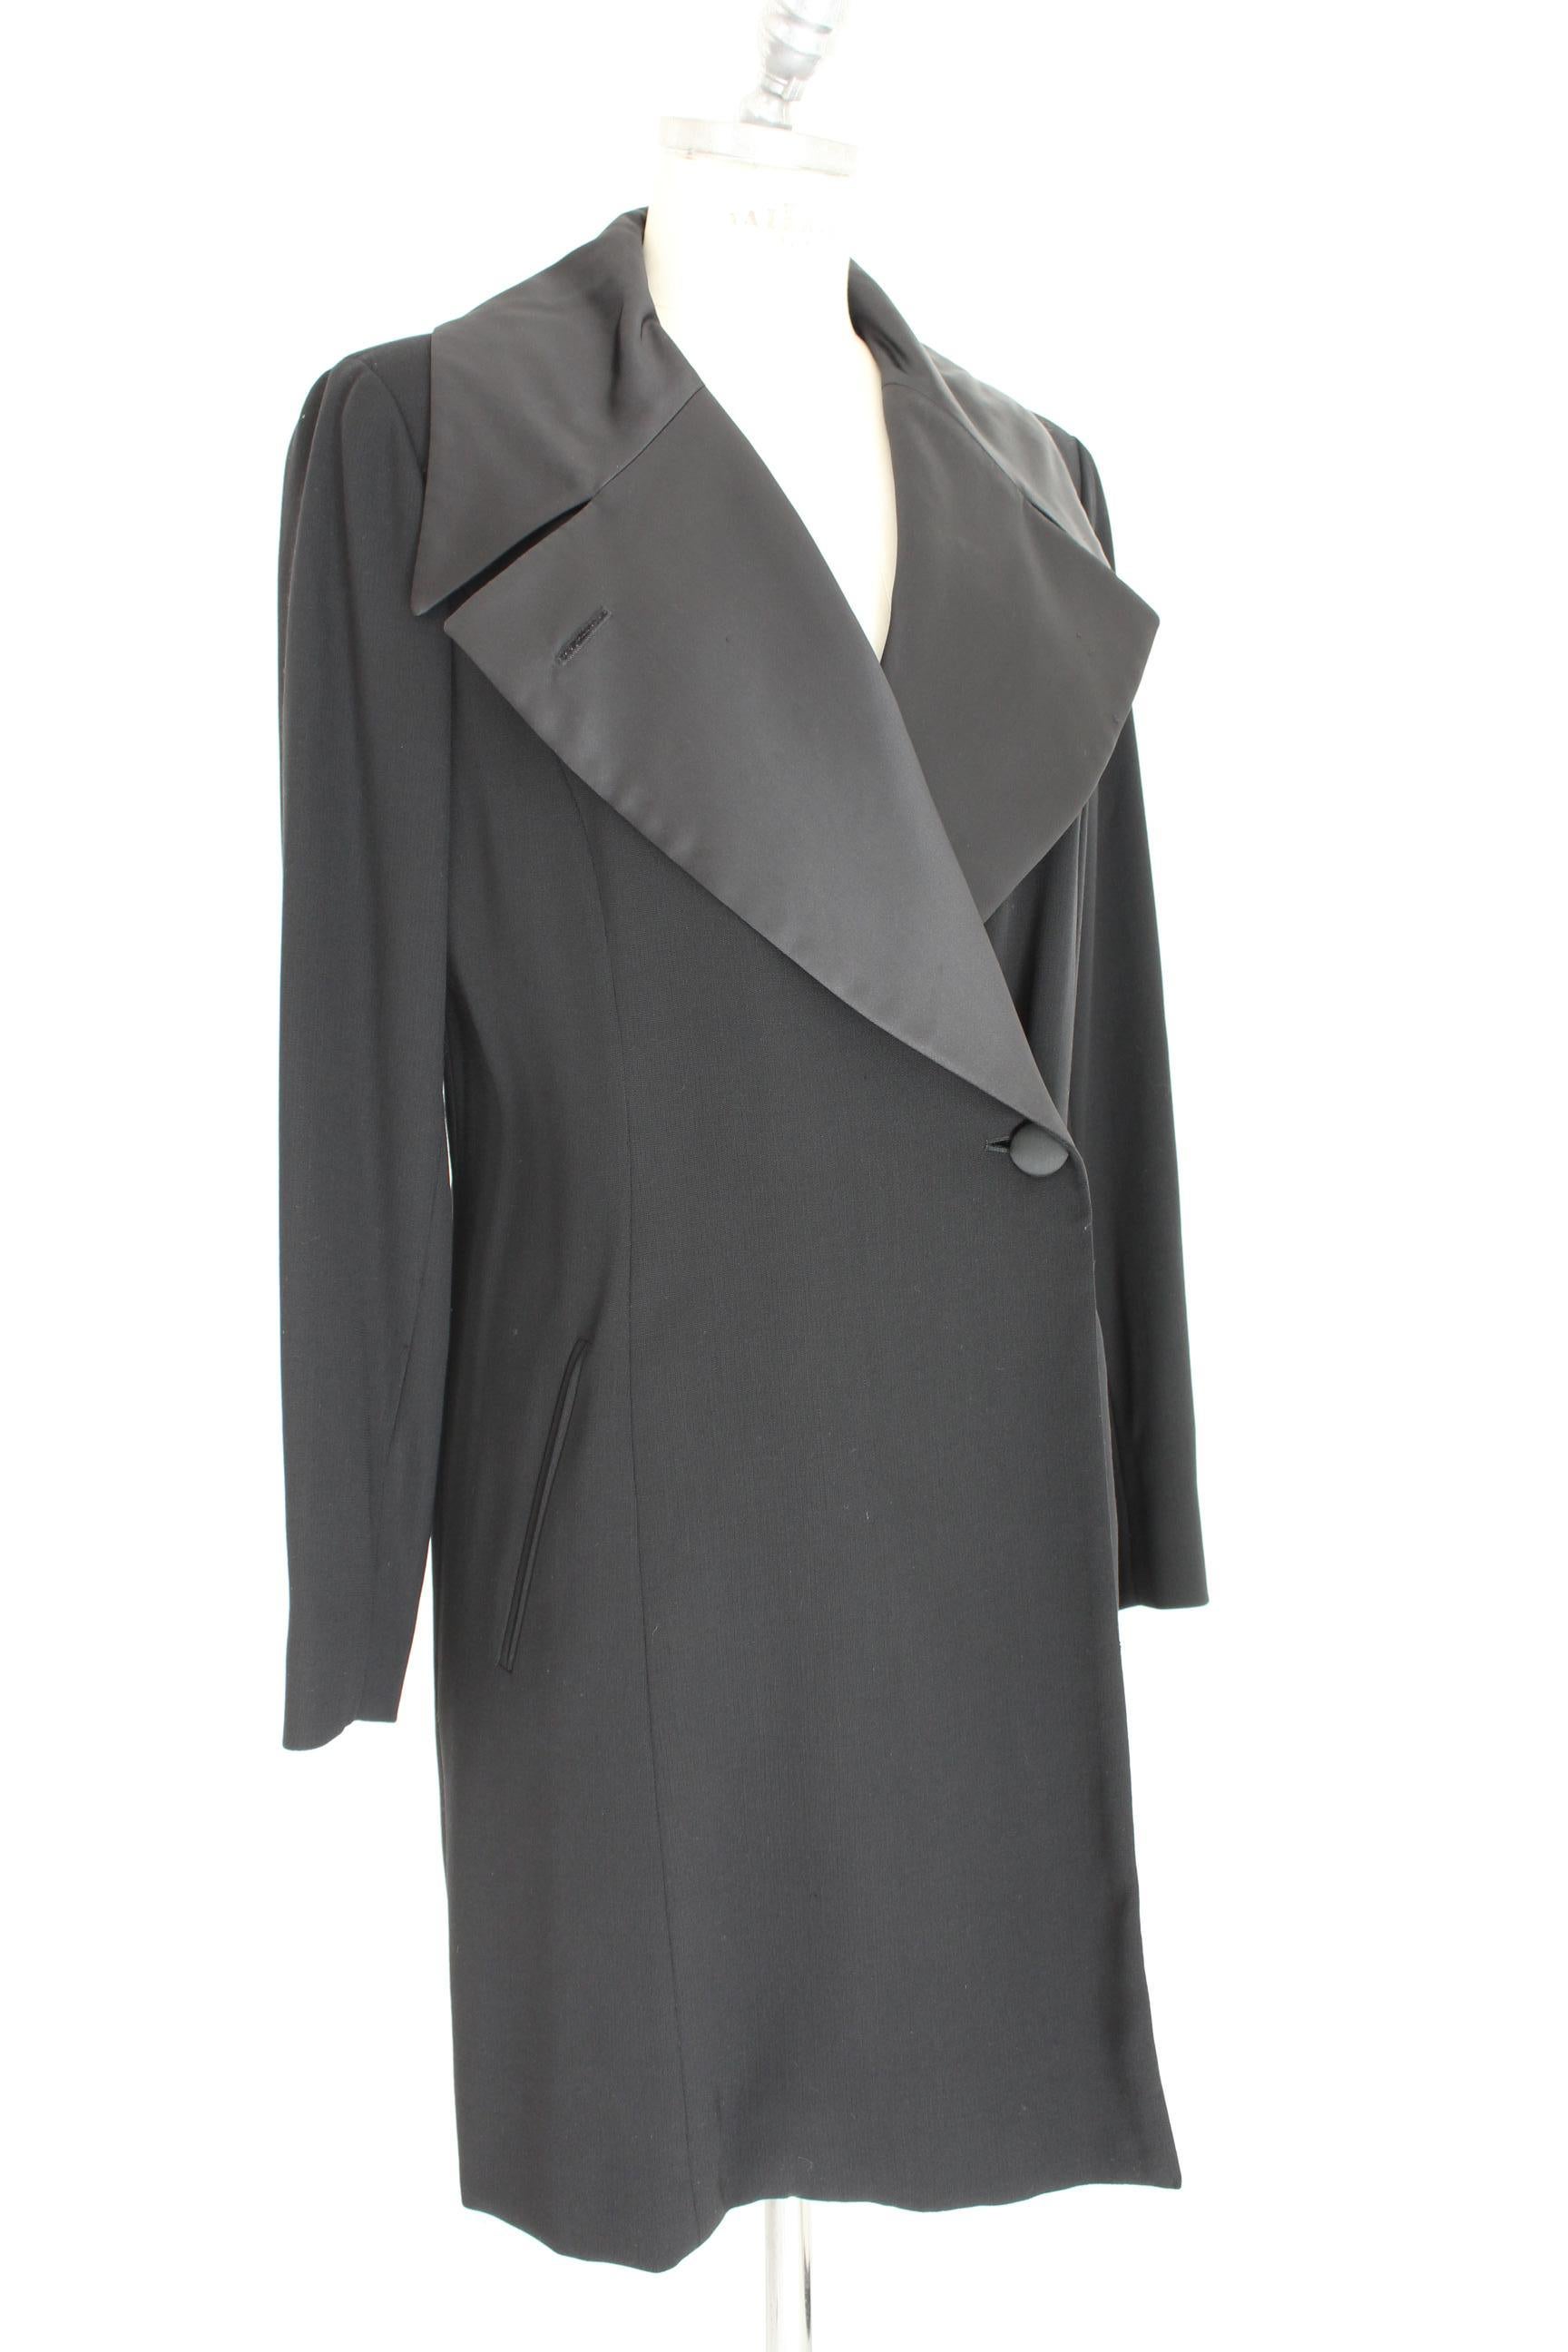 Women's Kenzo Paris Black Wool Long Jacket Coat 1990s Shinny Lapel One Button